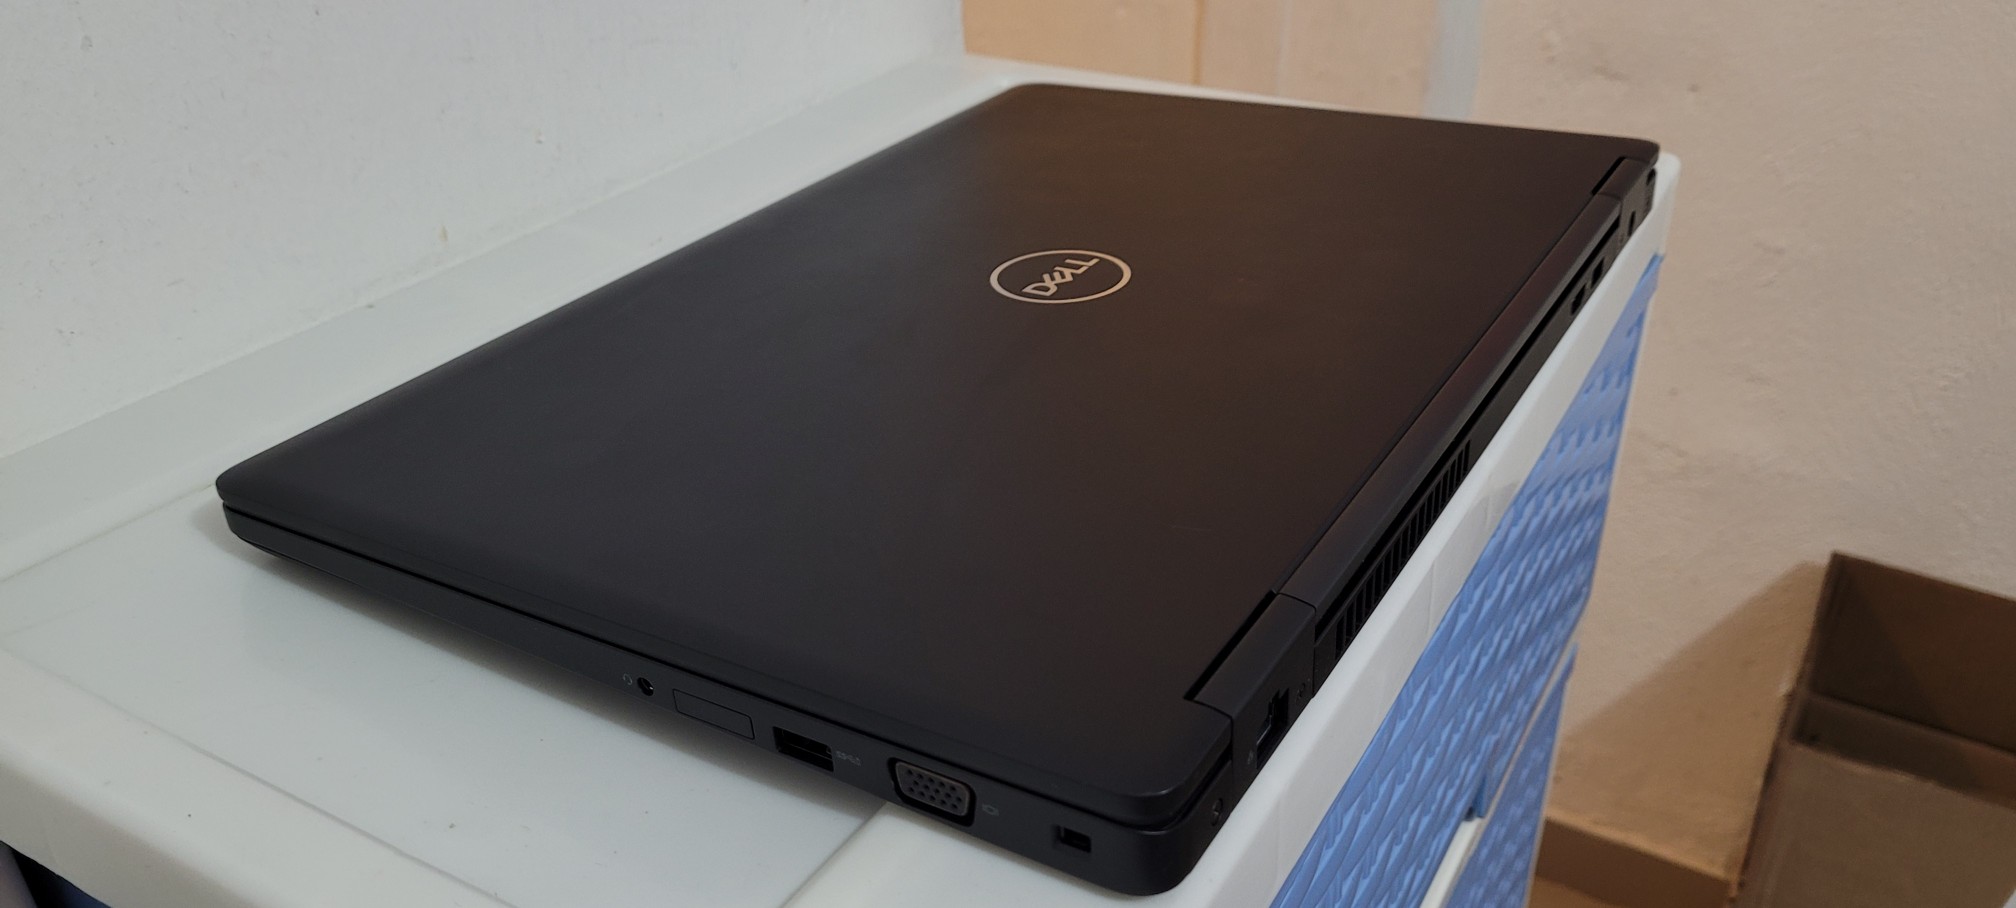 computadoras y laptops - Dell Slim 7470 14 Pulg Core i7 6ta Gen Ram 16gb ddr4 Disco 512gb SSD Video 8gb 2